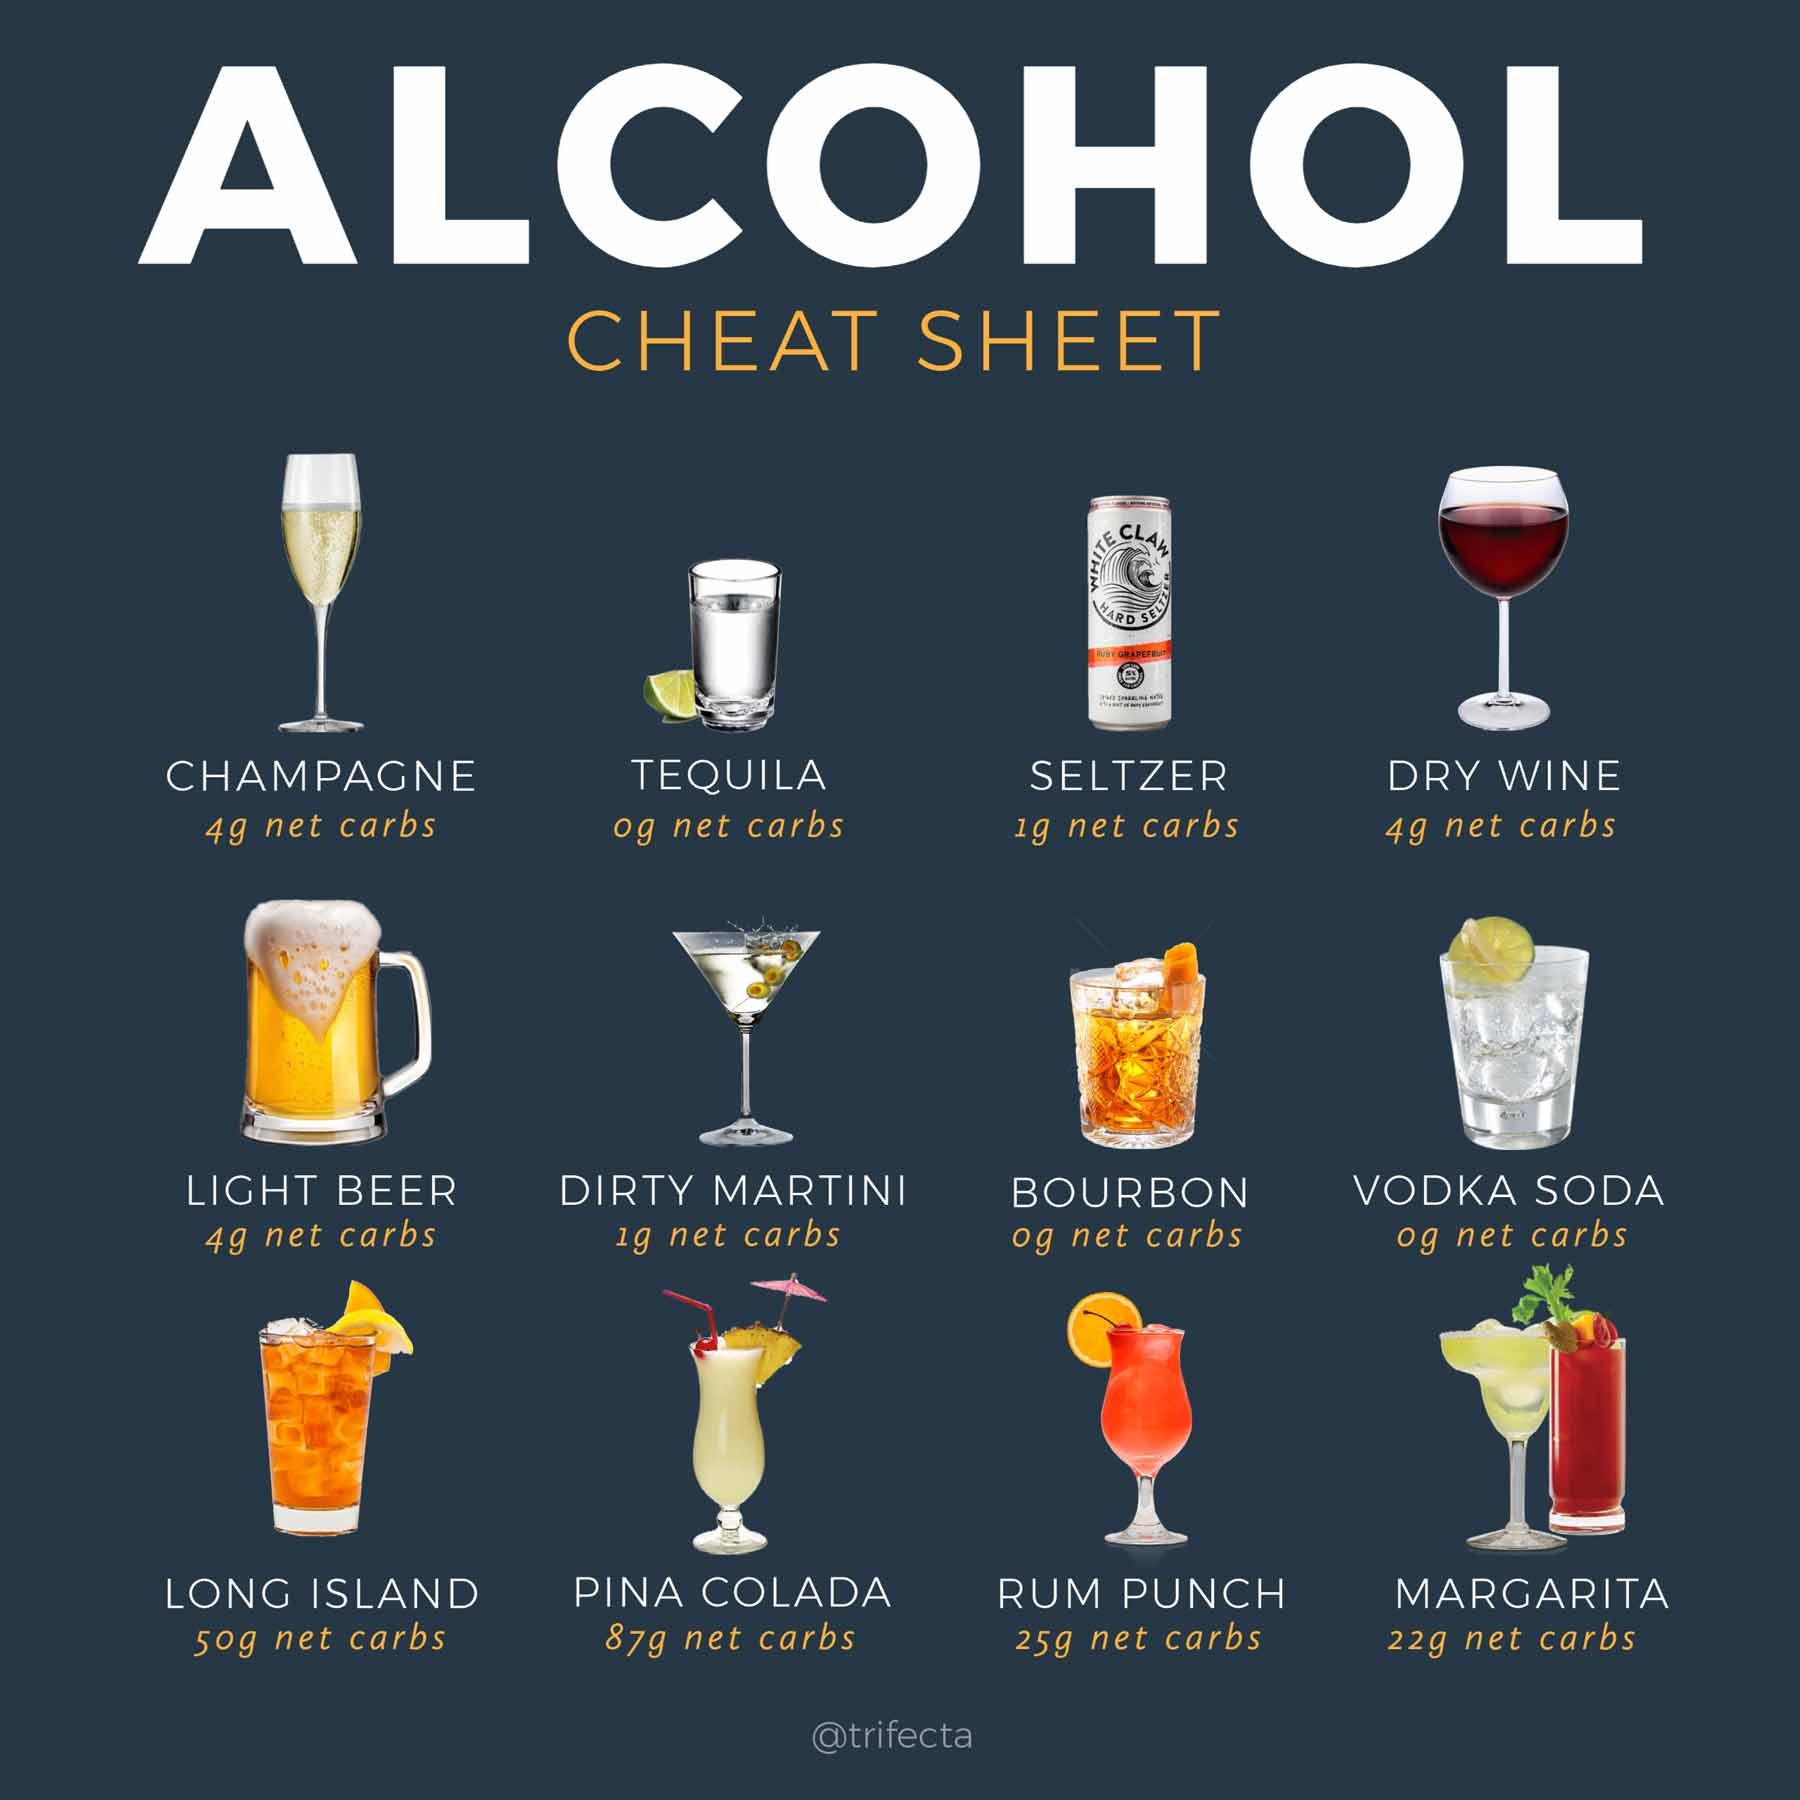 https://www.trifectanutrition.com/hs-fs/hubfs/KETO-Alcohol-CHEAT-SHEET.jpg?width=1800&name=KETO-Alcohol-CHEAT-SHEET.jpg